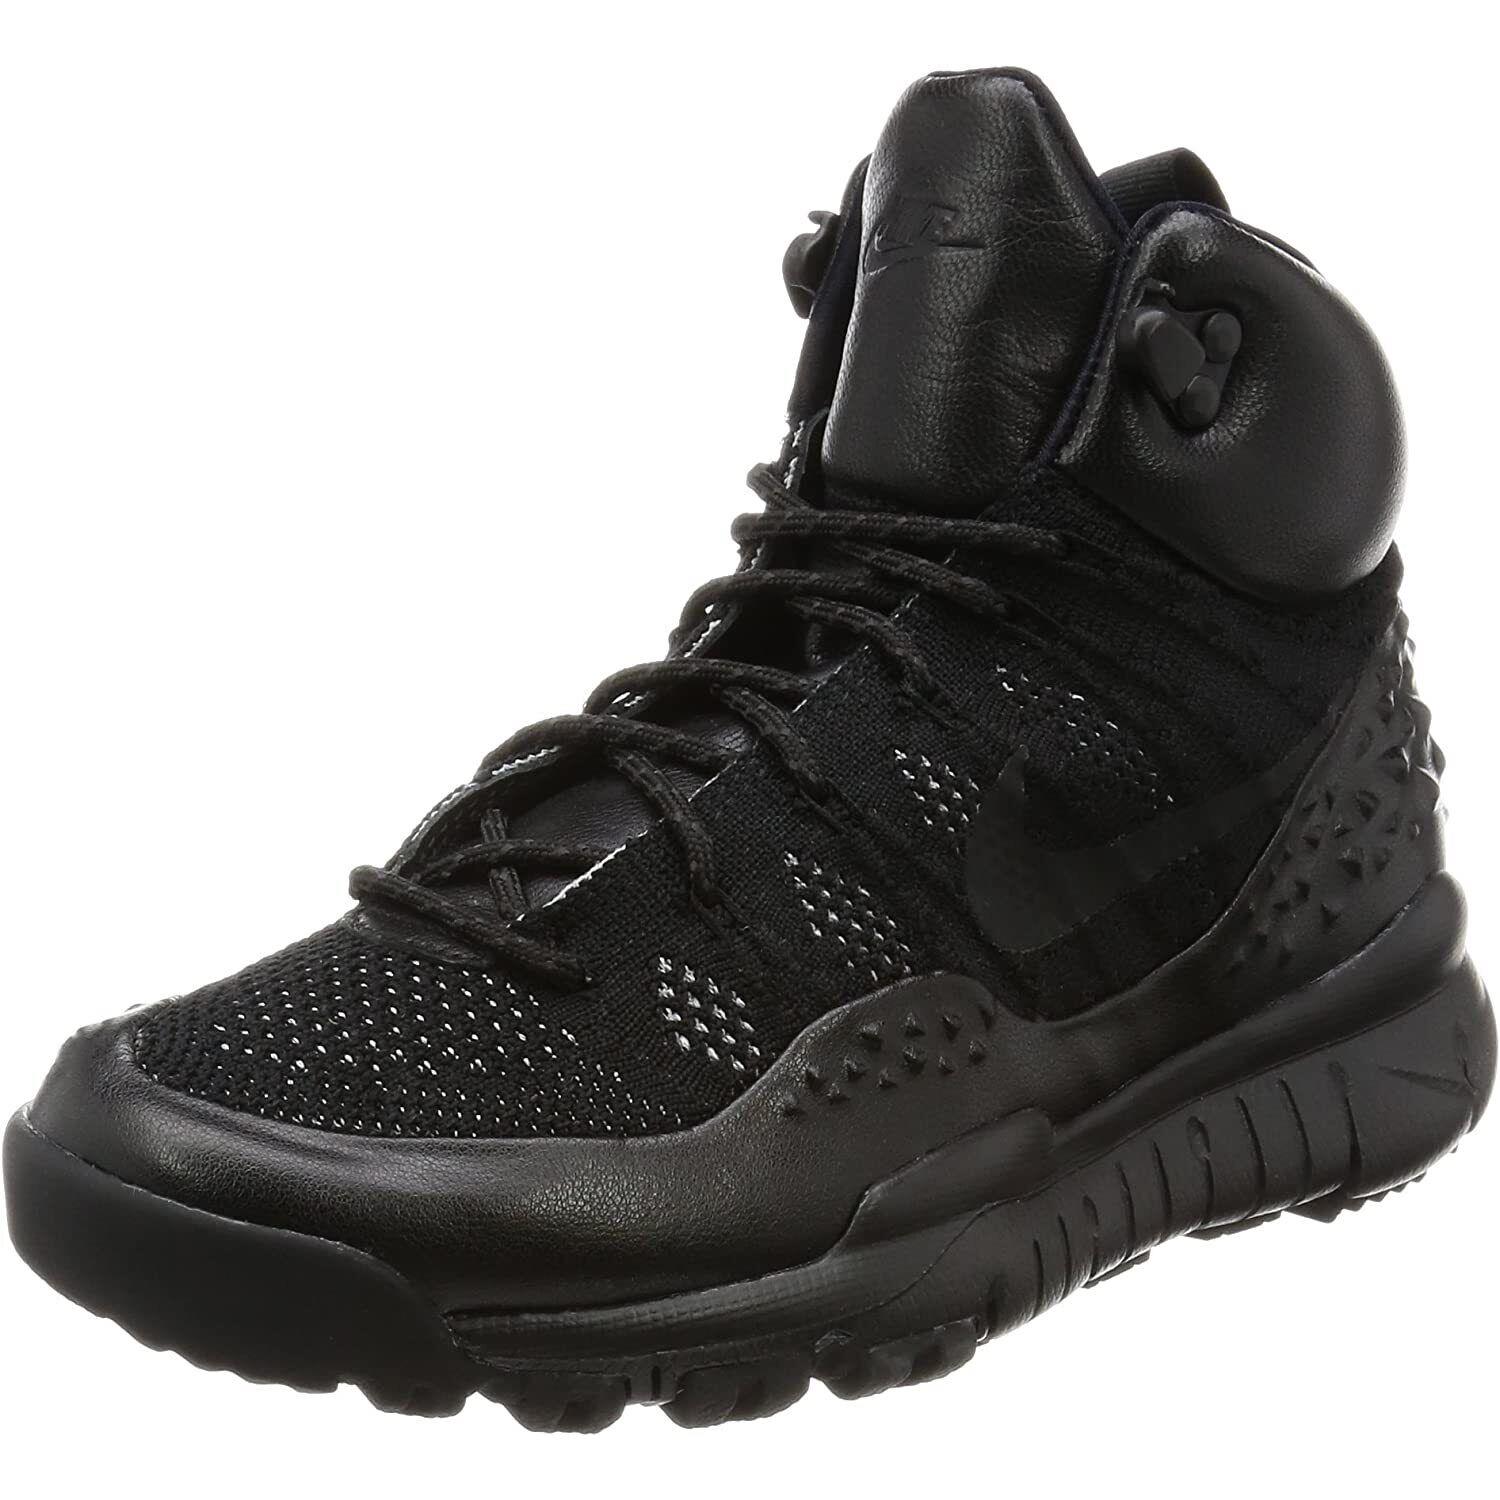 Nike Lupinek Flyknit Black/black-anthracite Running Shoes Women Size 8